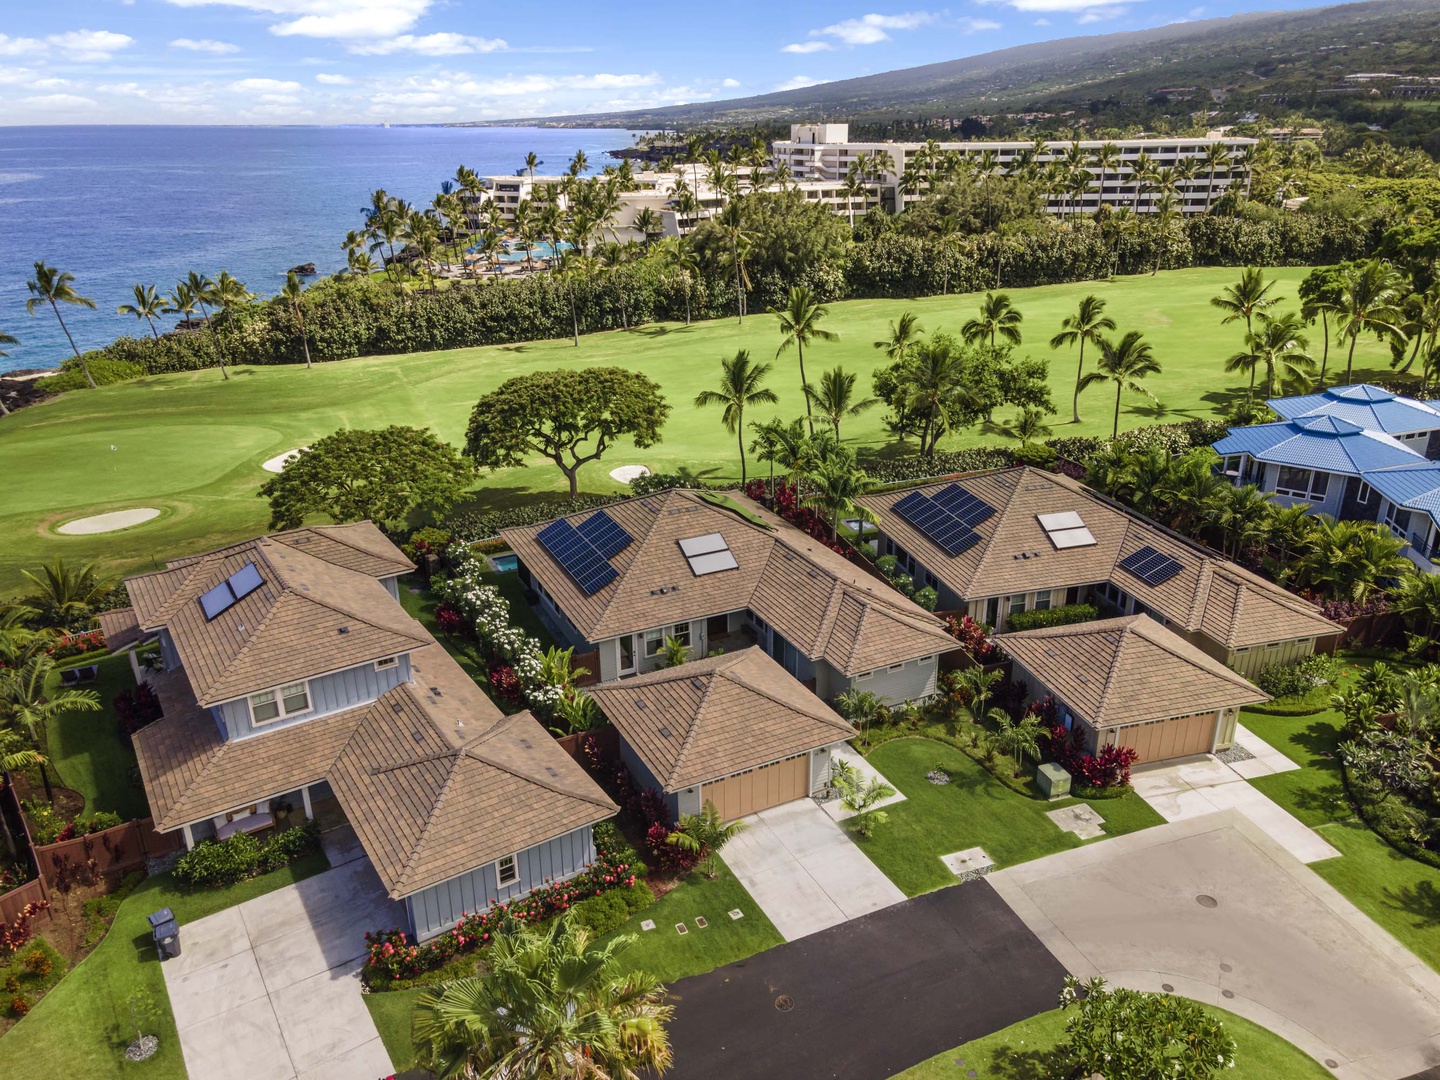 Kailua Kona Vacation Rentals, Holua Kai #27 - Postcard worthy views from the sky!